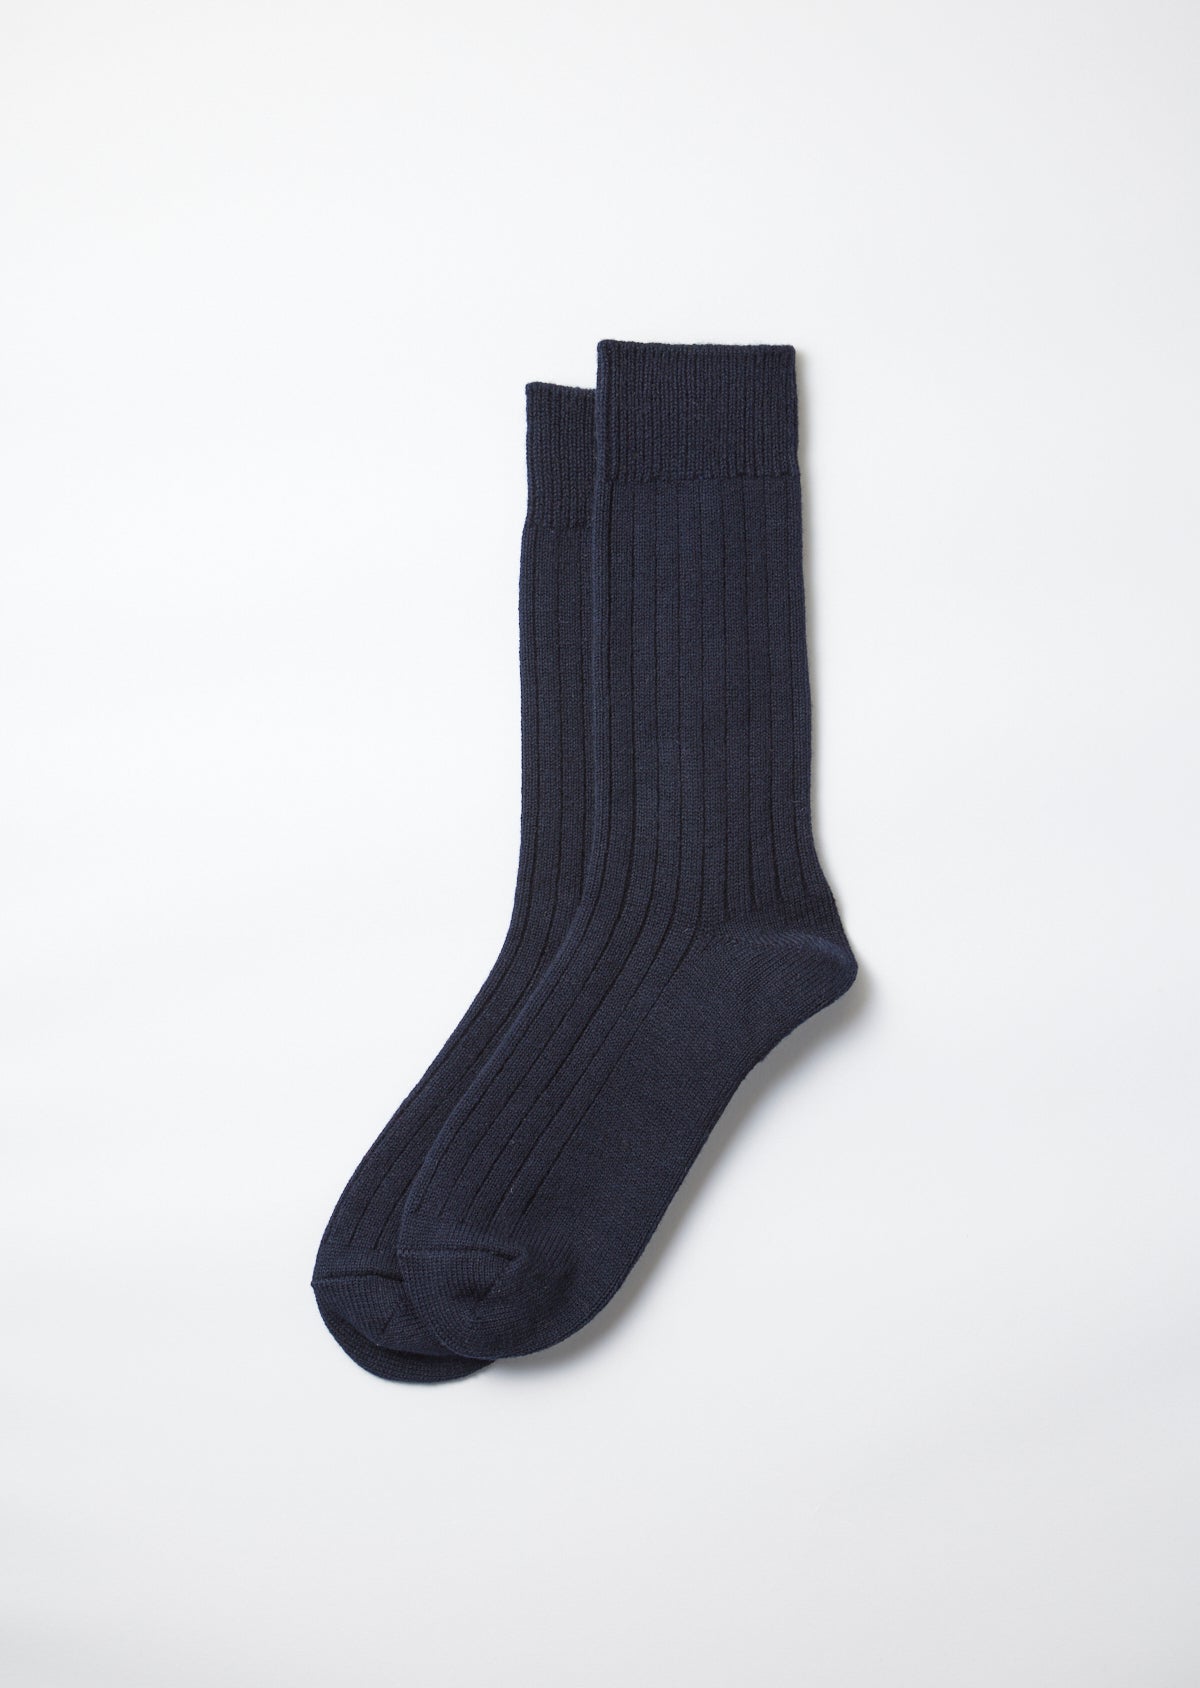 Baumwolle / Wolle Socken - navy